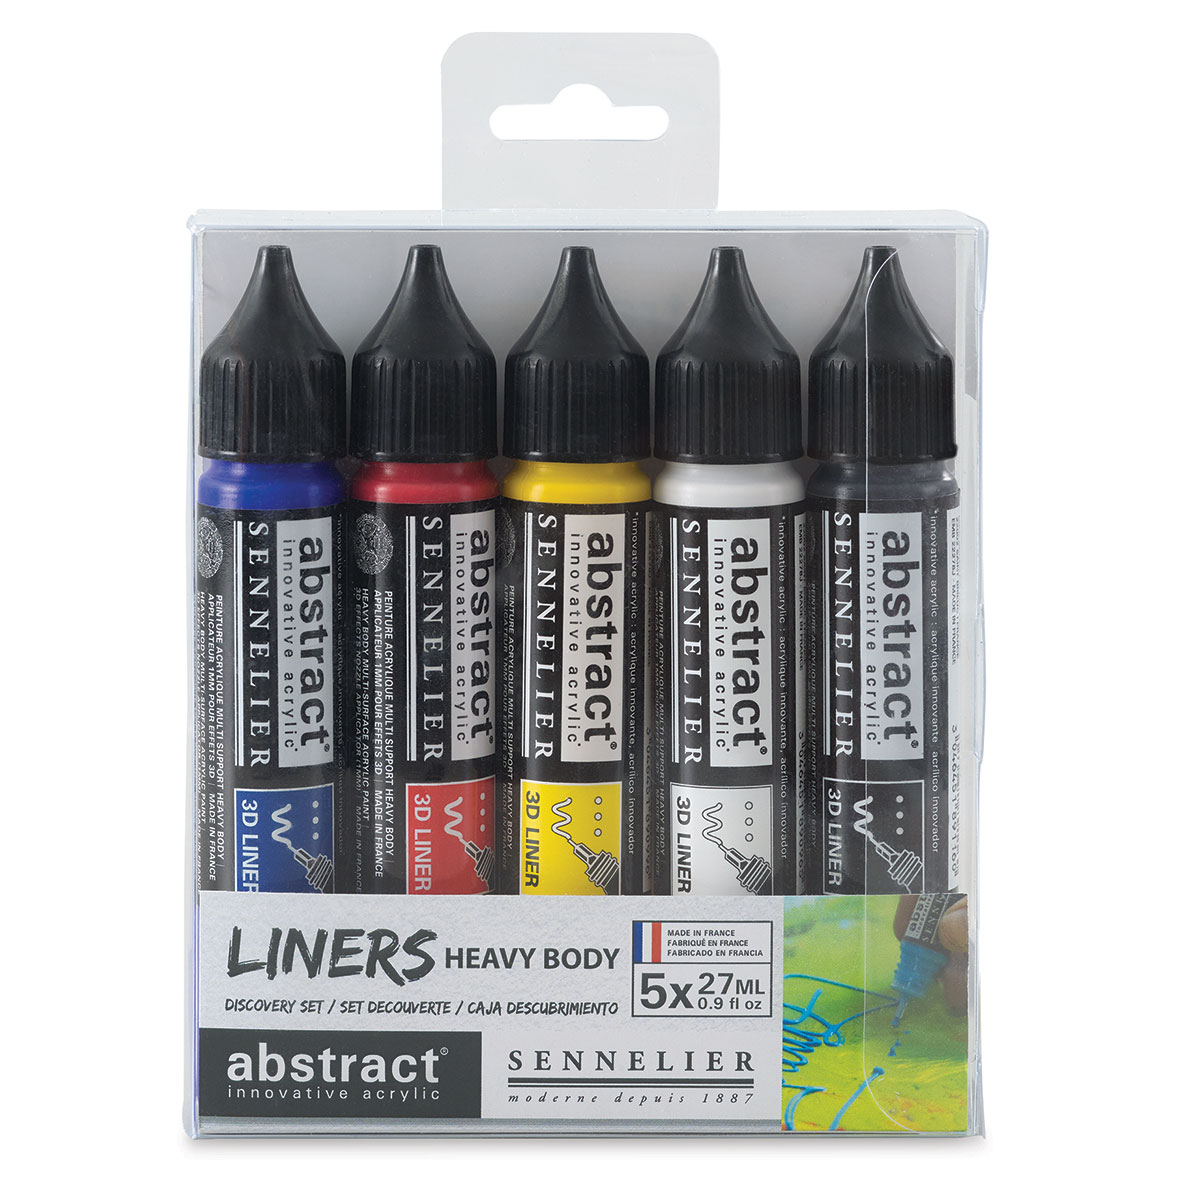 Studio Series Acrylic Paint Marker Set